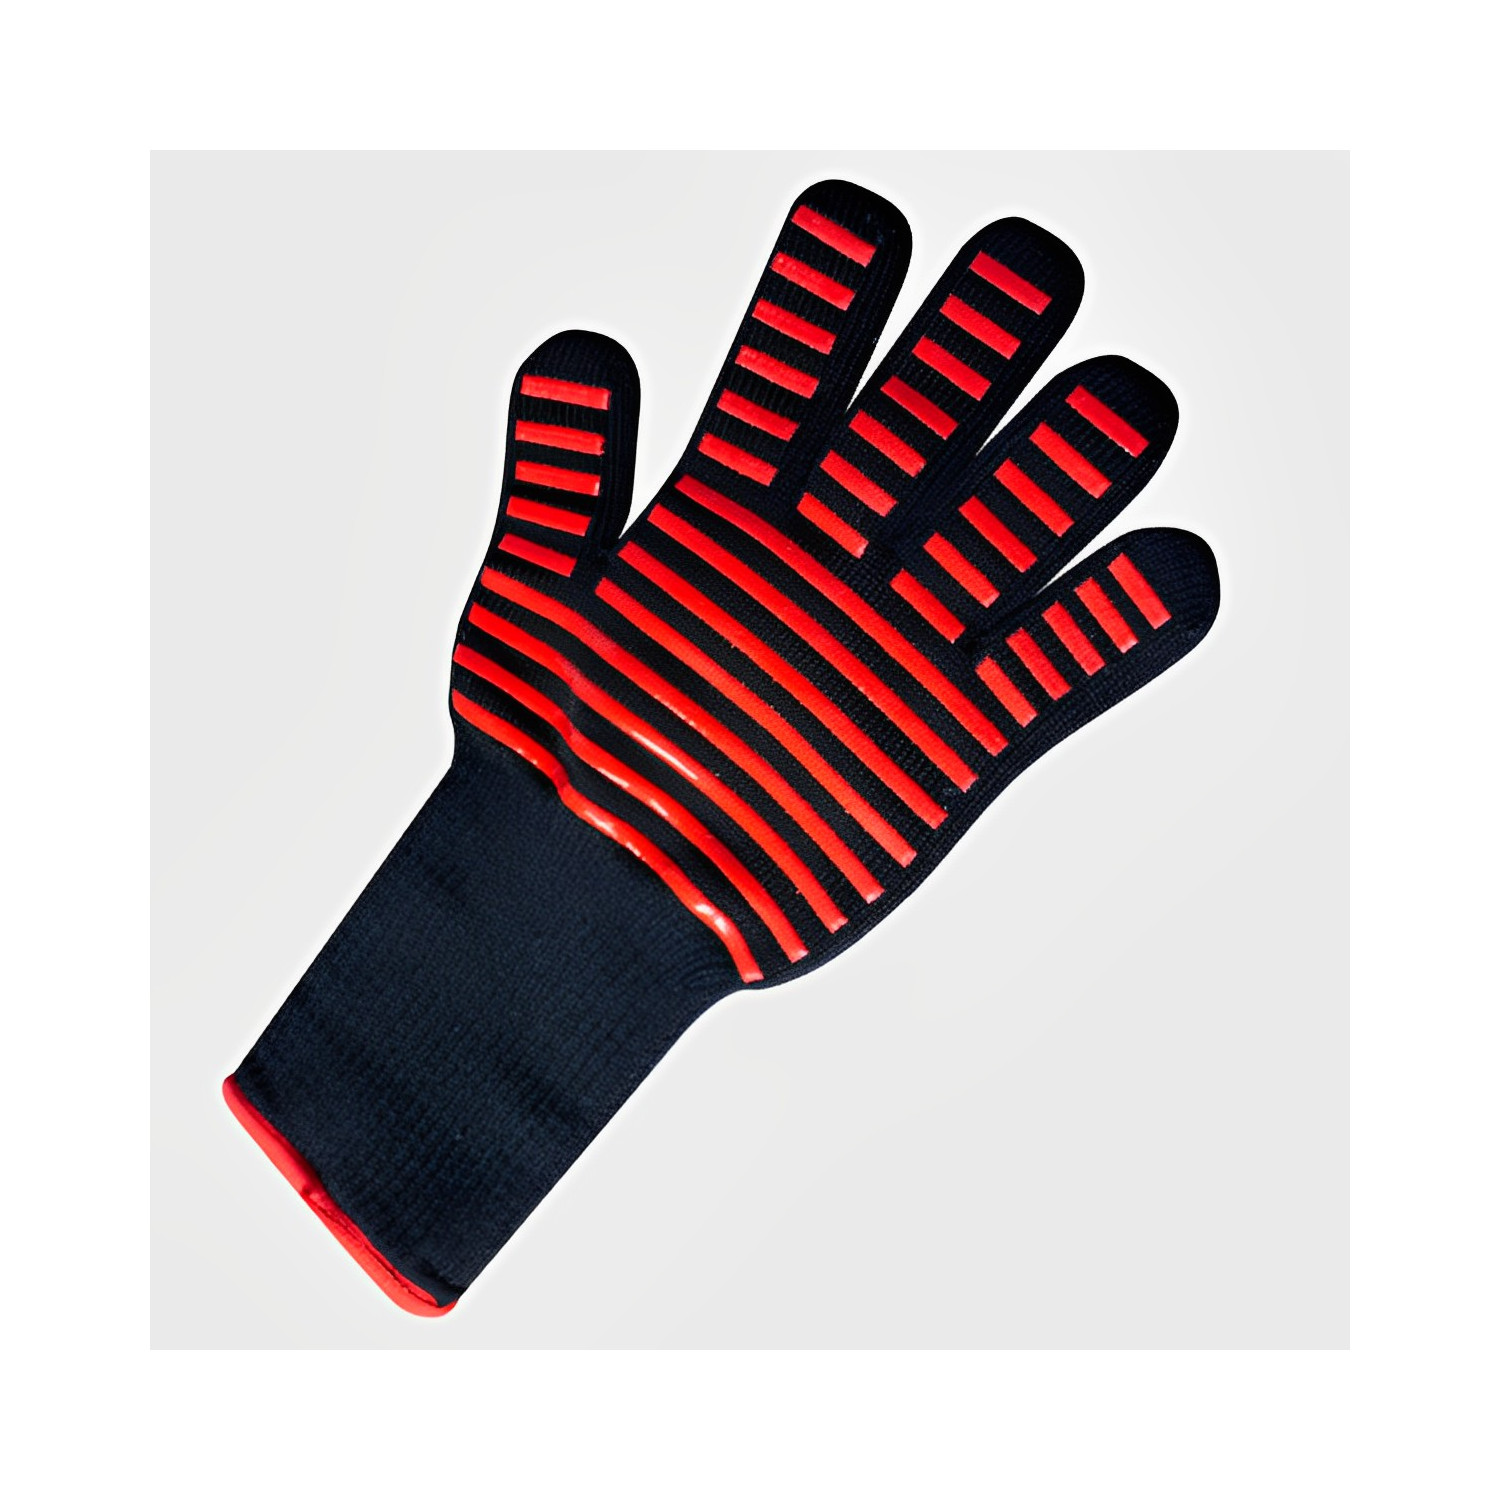 Gant anti-chaleur : protège jusqu'à 260°C